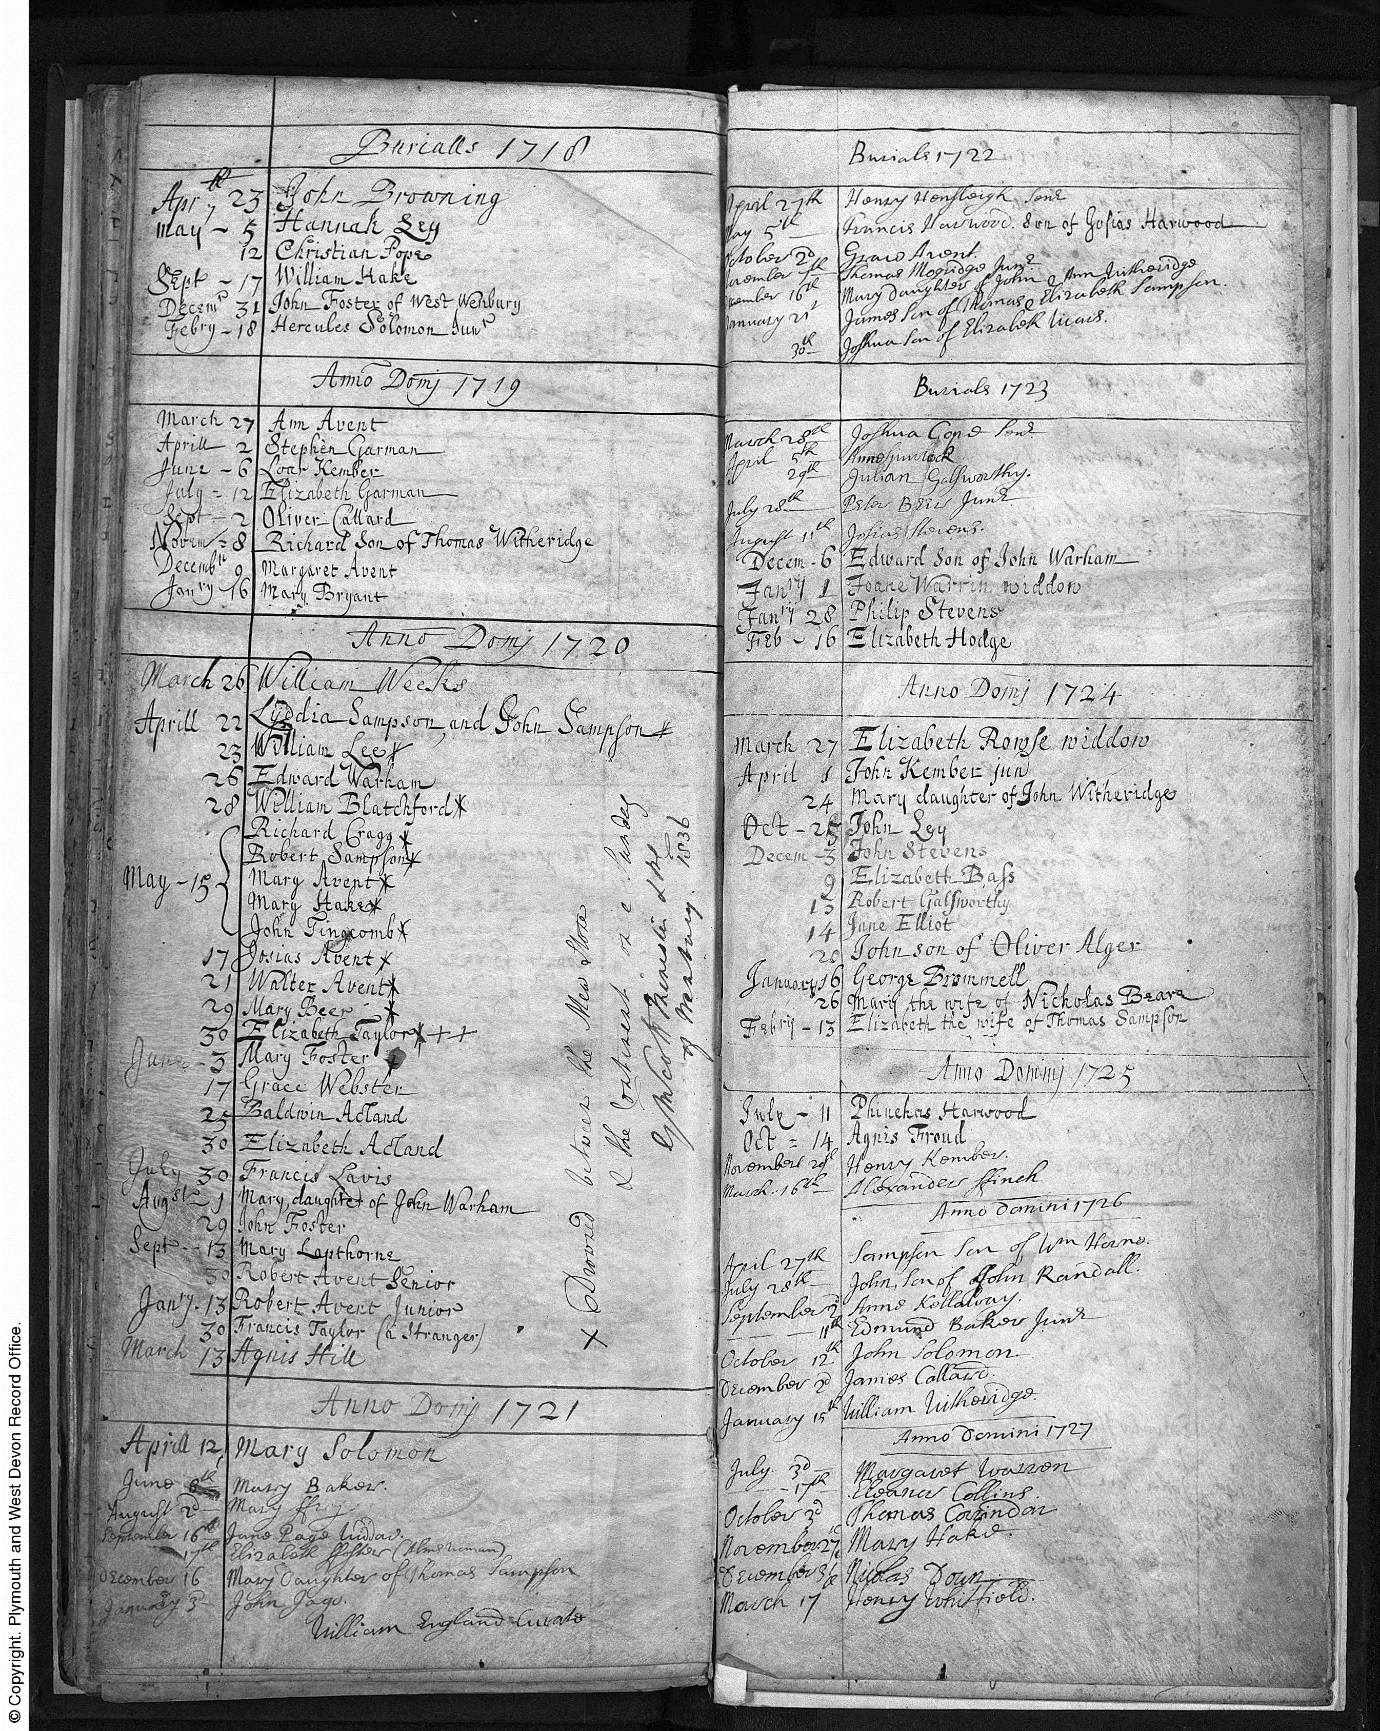 C:\Users\Virginia Rundle\Documents\Ancestry\Northey Moar Files\Galsworthy\Death of John Galsworthy 1724.jpg